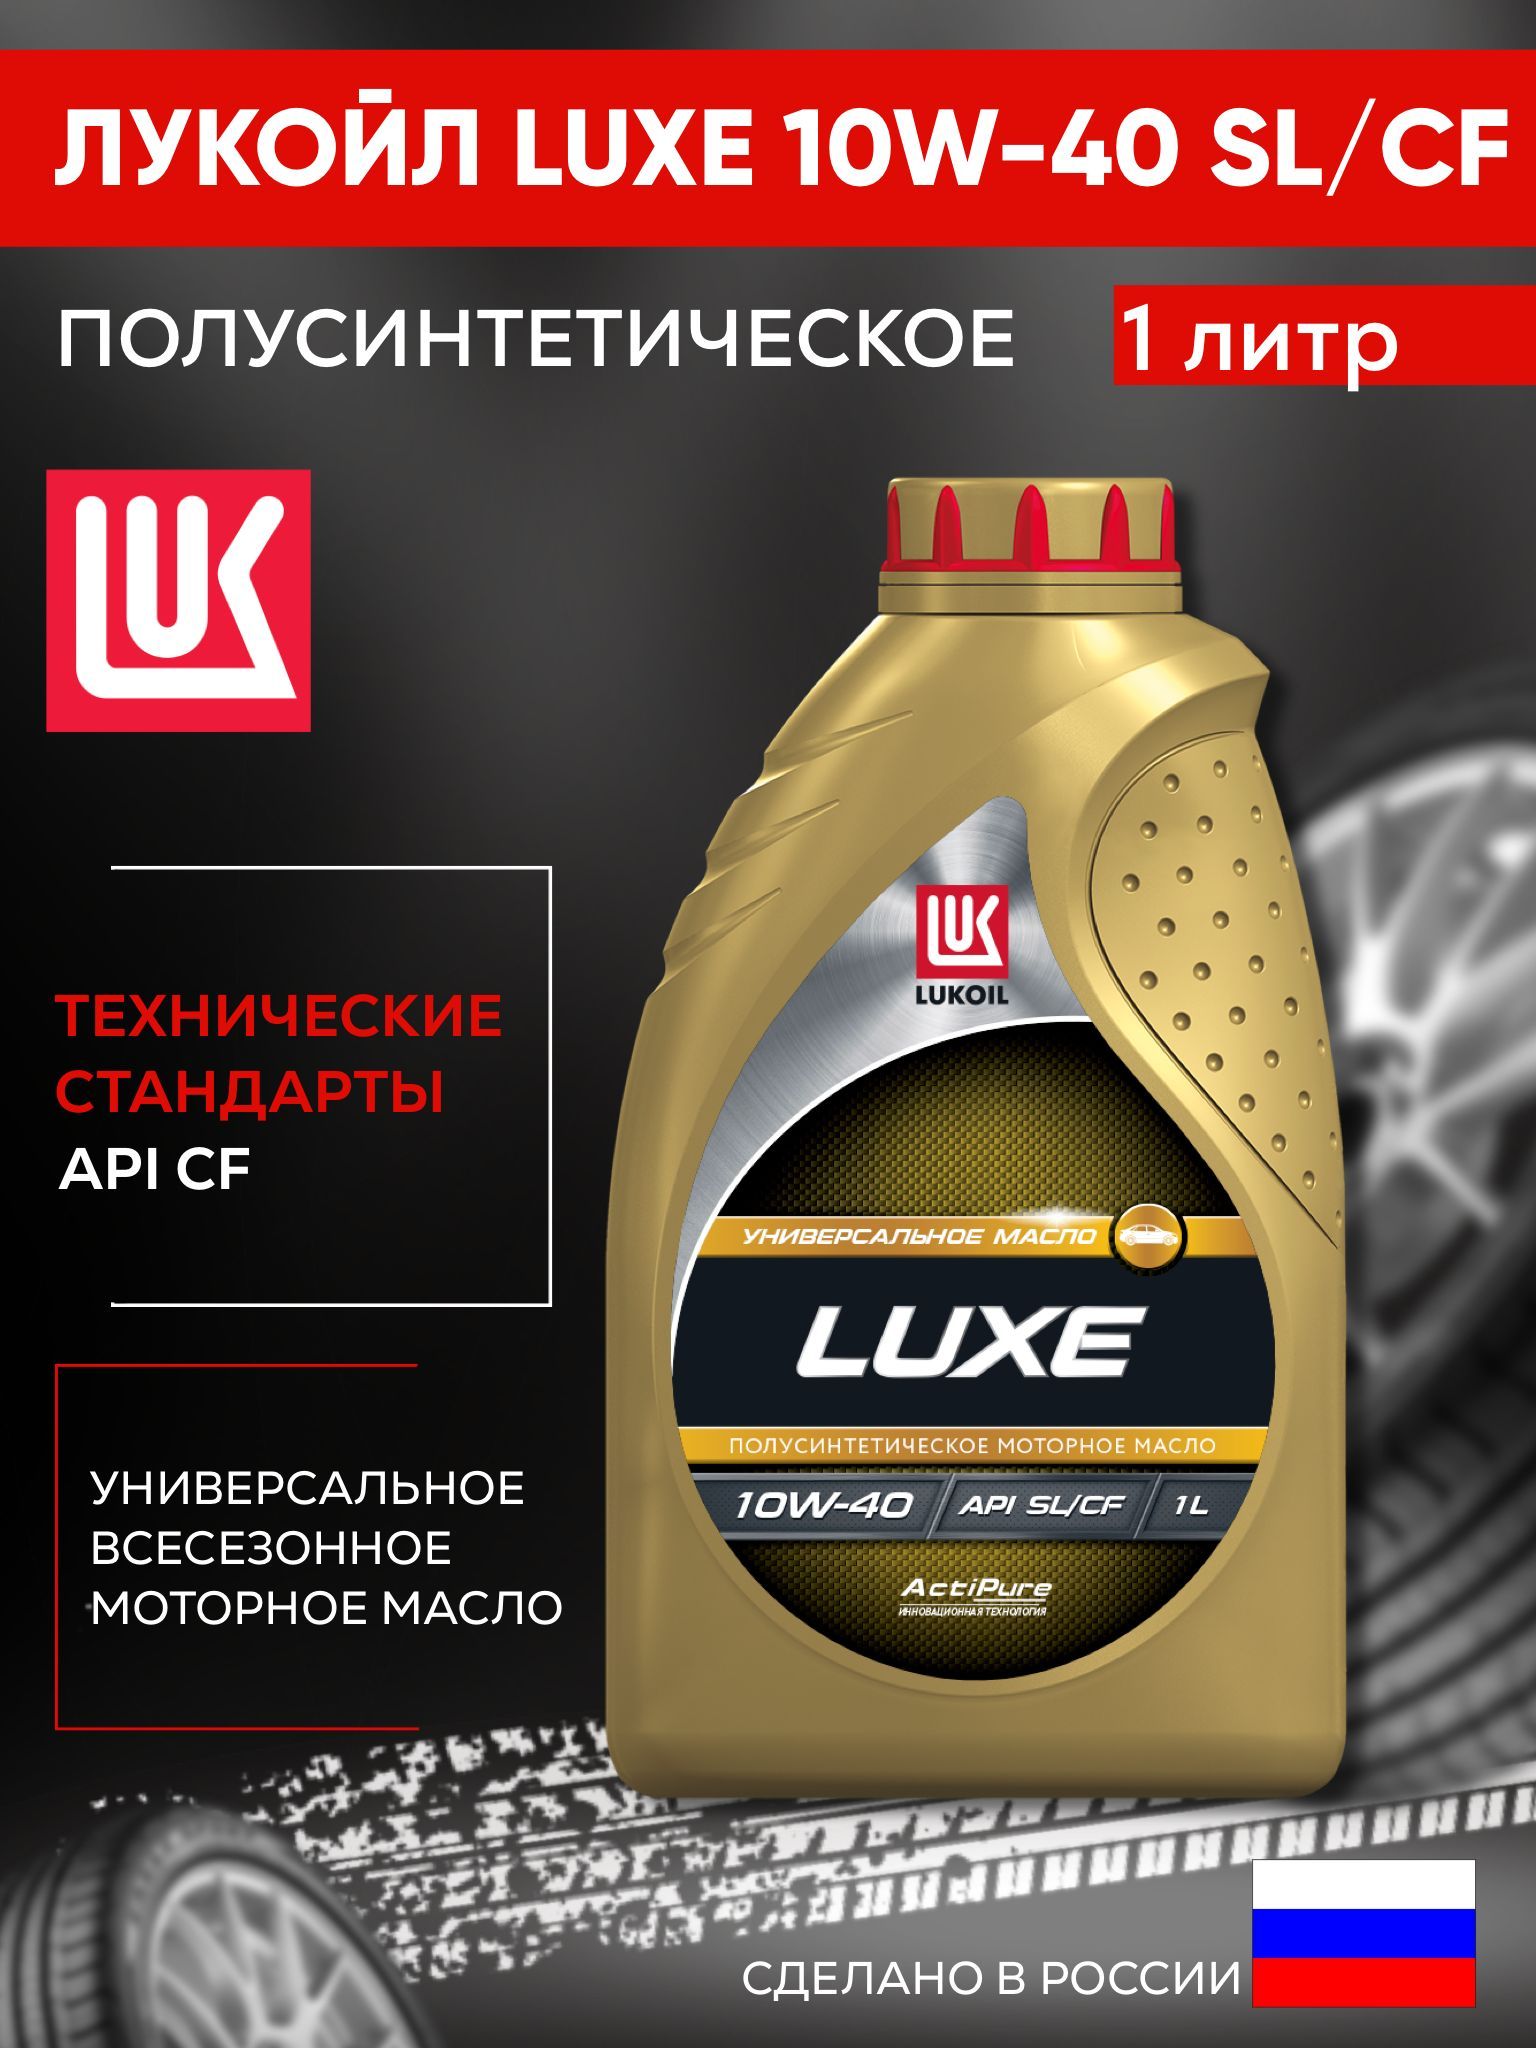 Масло лукойл люкс полусинтетика отзывы. Lukoil Luxe 10w-40. Lukoil Avantgarde Ultra 10w-40. Лукойл Люкс 10w 40 характеристики. Лукойл Люкс 10w 40 полусинтетика отзывы.